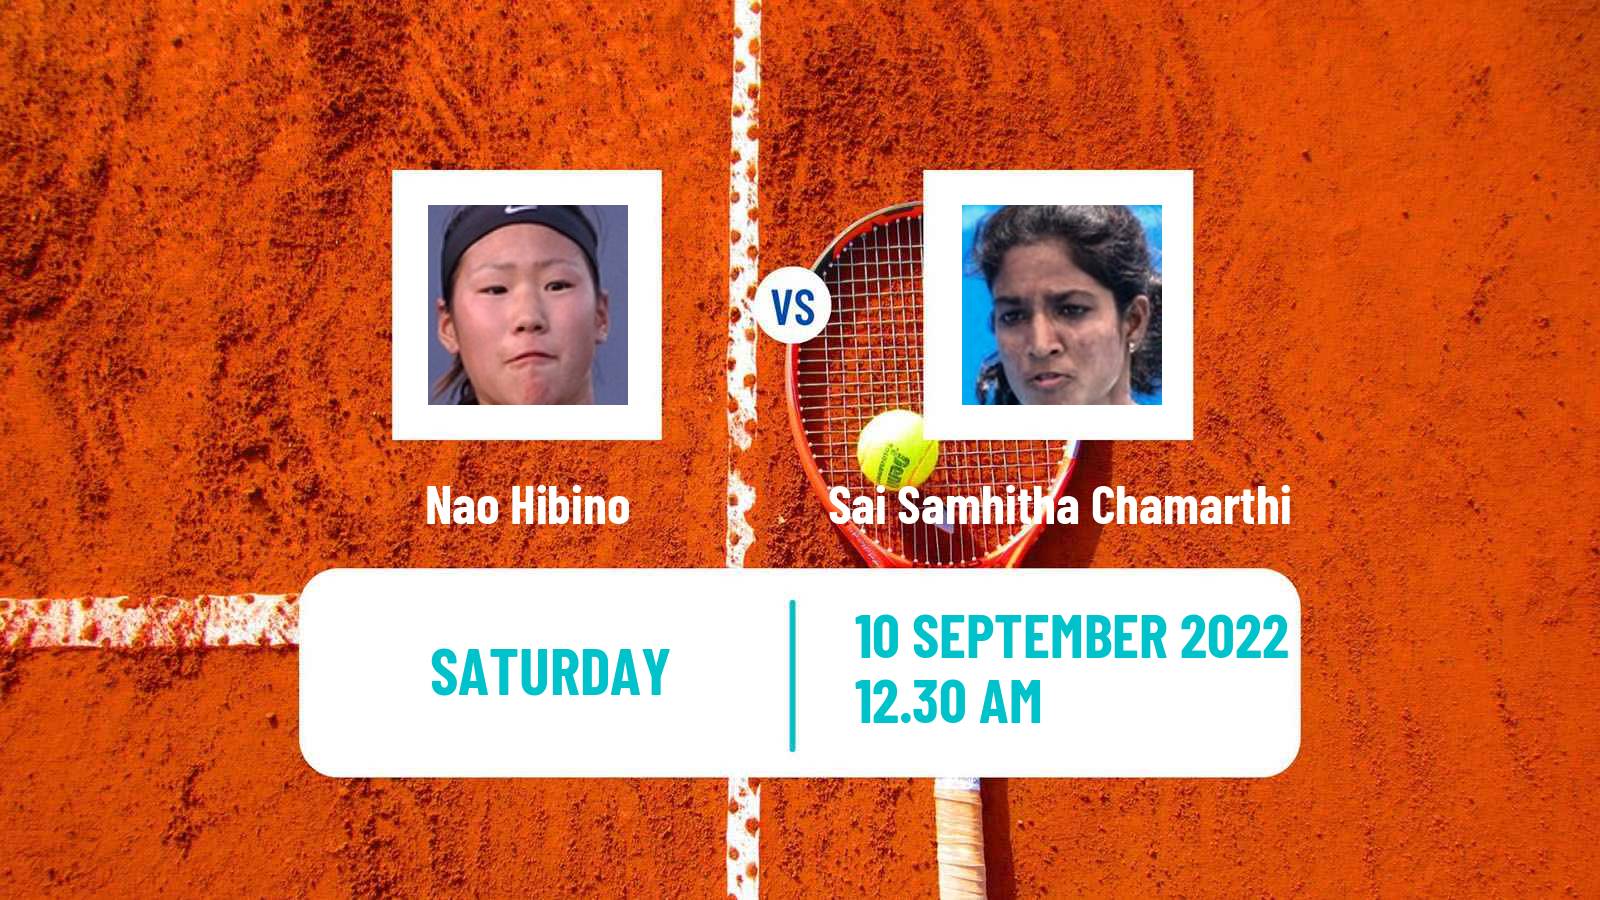 Tennis WTA Chennai Nao Hibino - Sai Samhitha Chamarthi